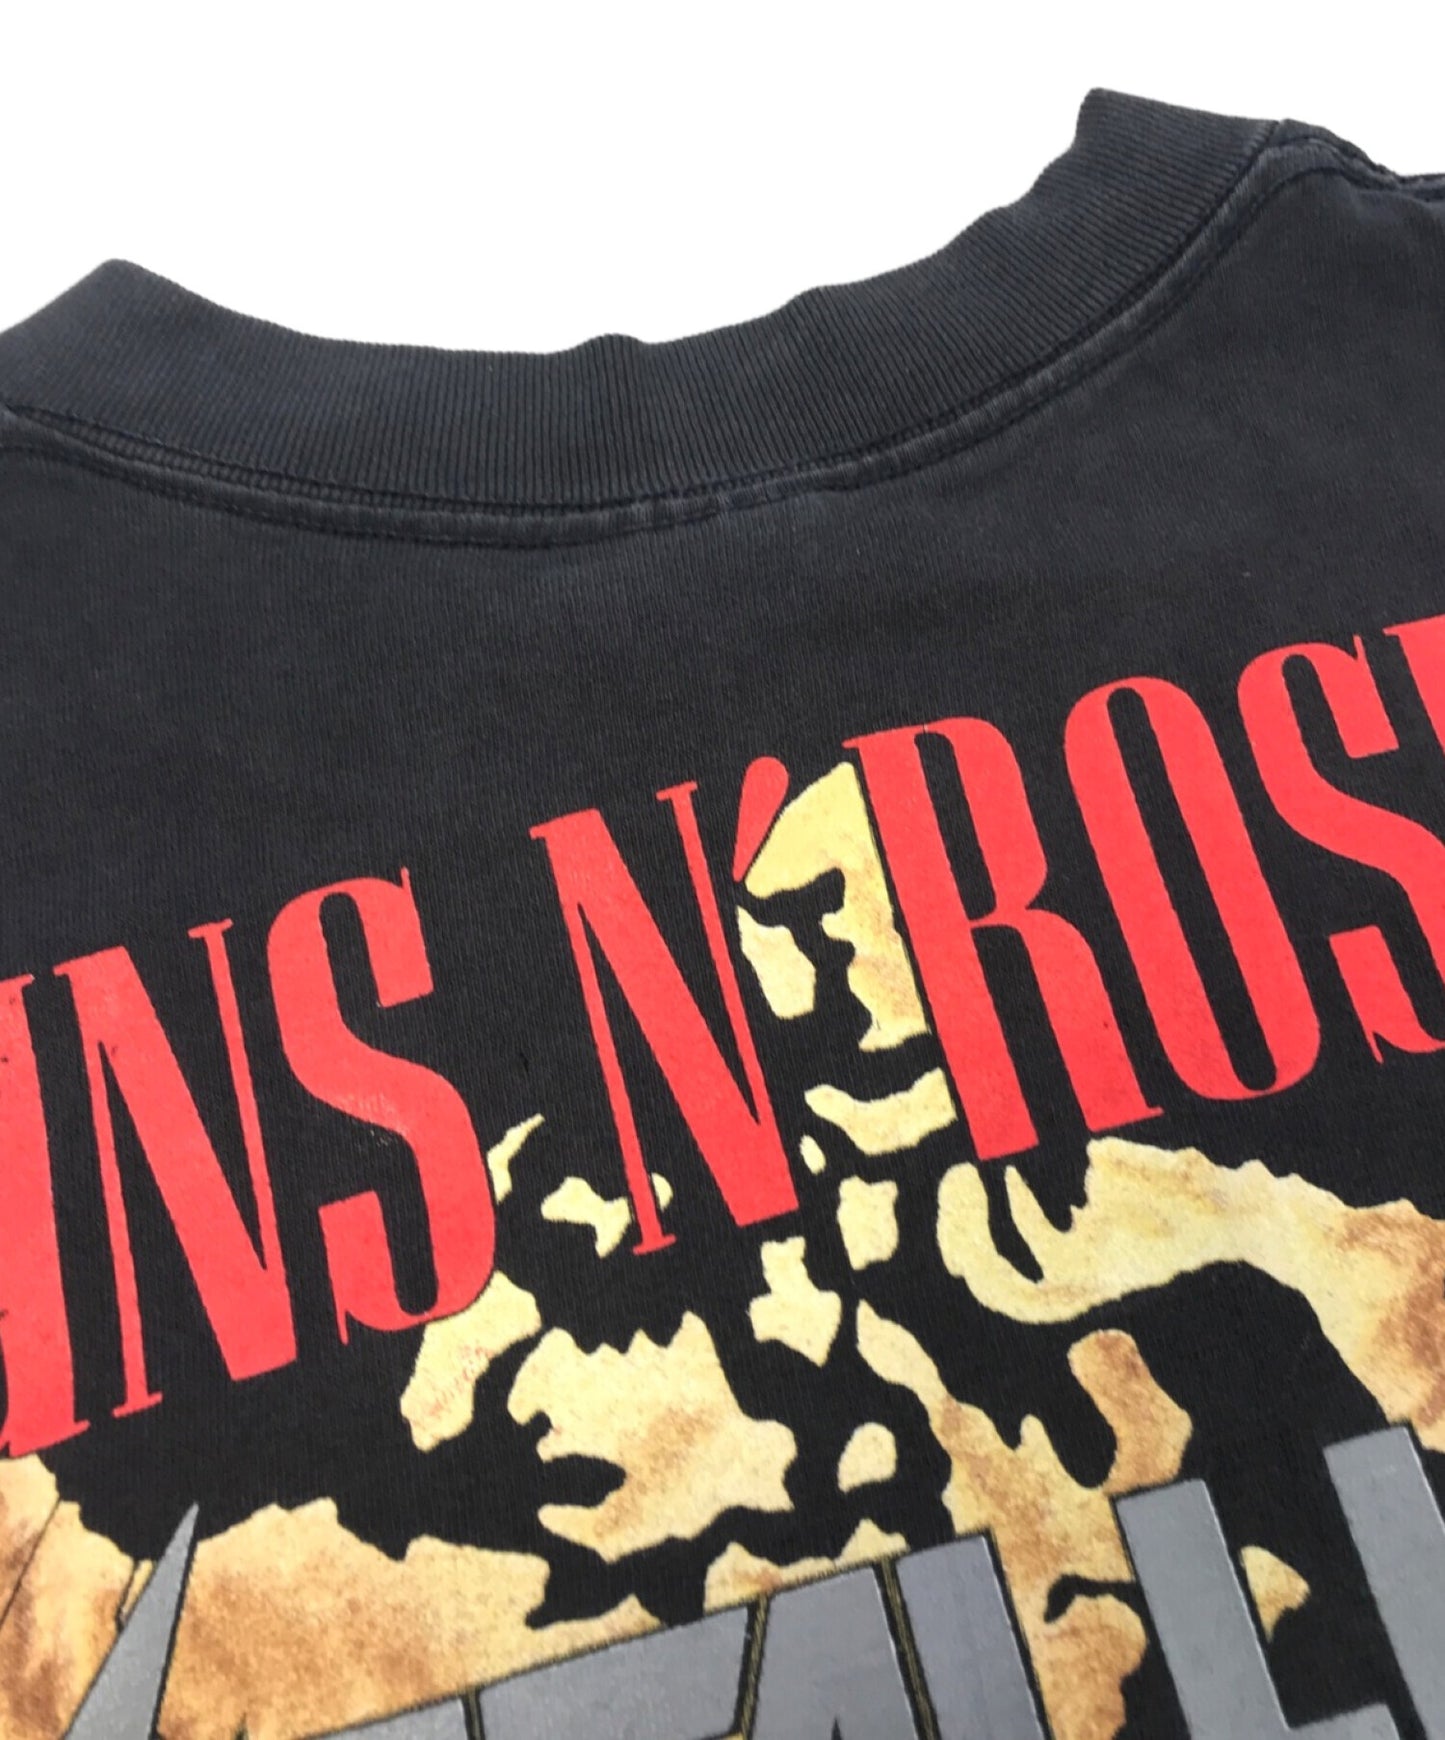 Metallica X Guns N 'Roses Band Te-Shirt 92's Tour ทัวร์